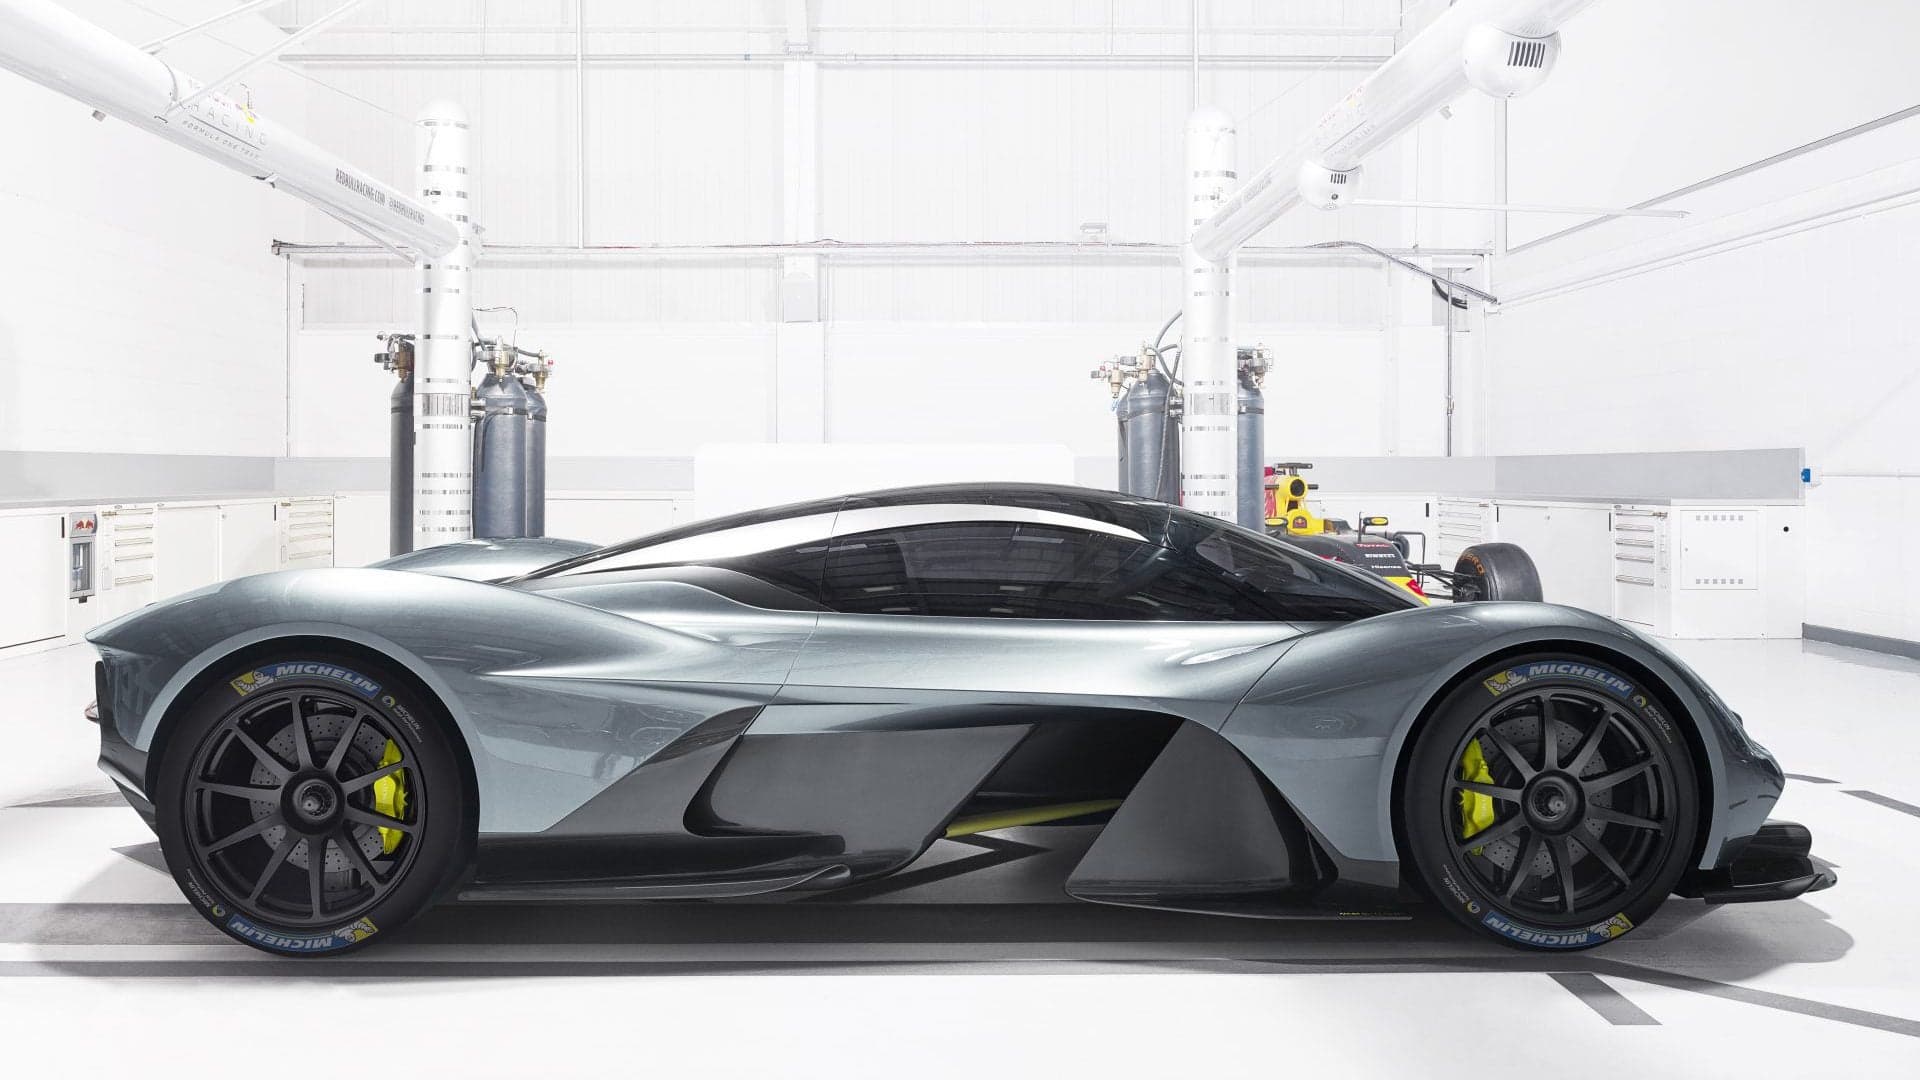 Aston Martin’s Mid-Engined Ferrari 488 Rival Coming in 2020